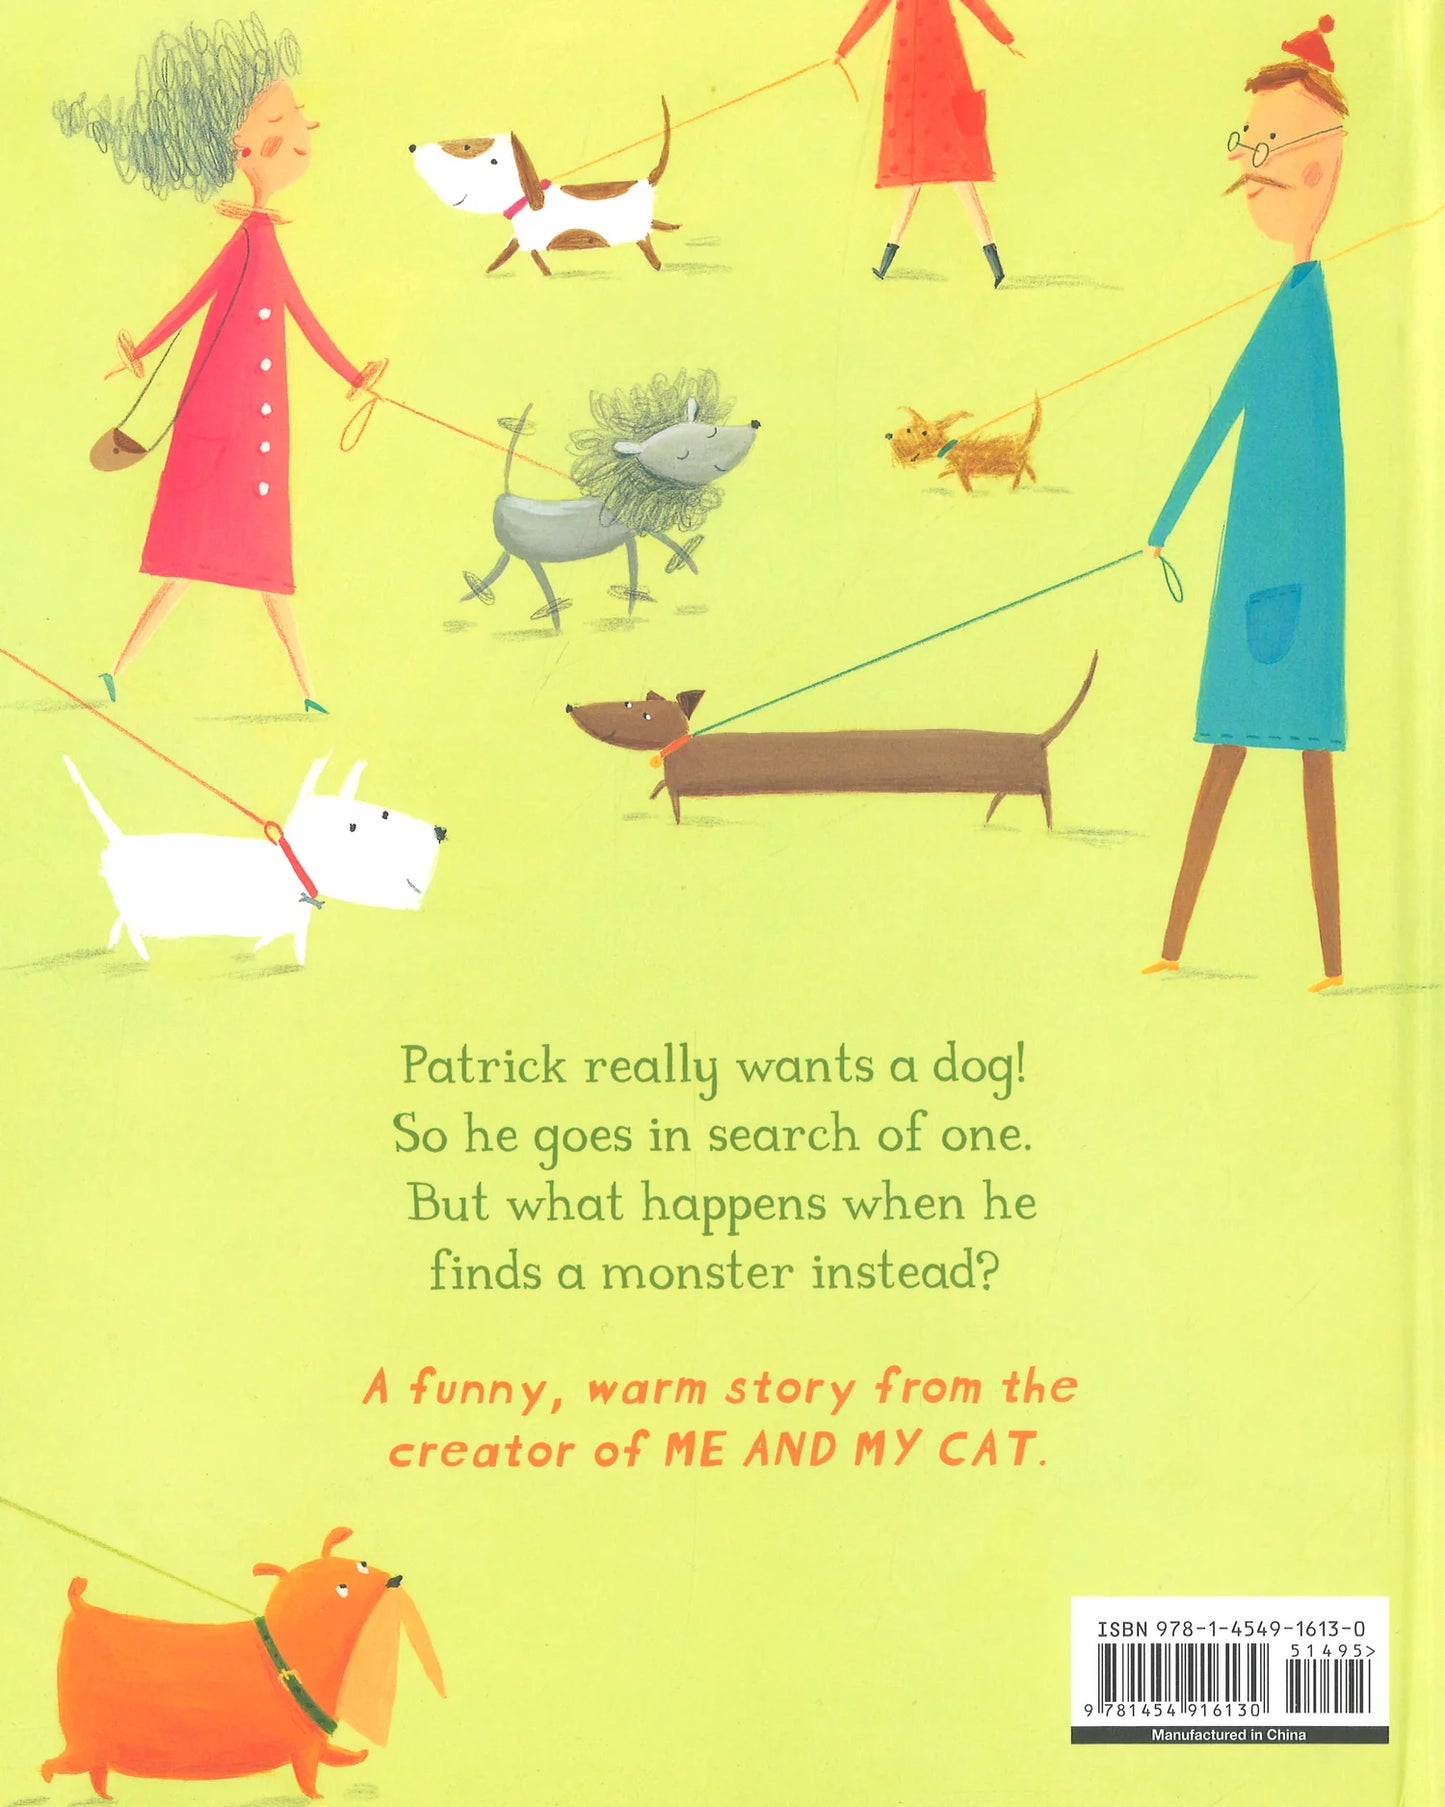 Patrick Wants a Dog by Ekaterina Trukhan